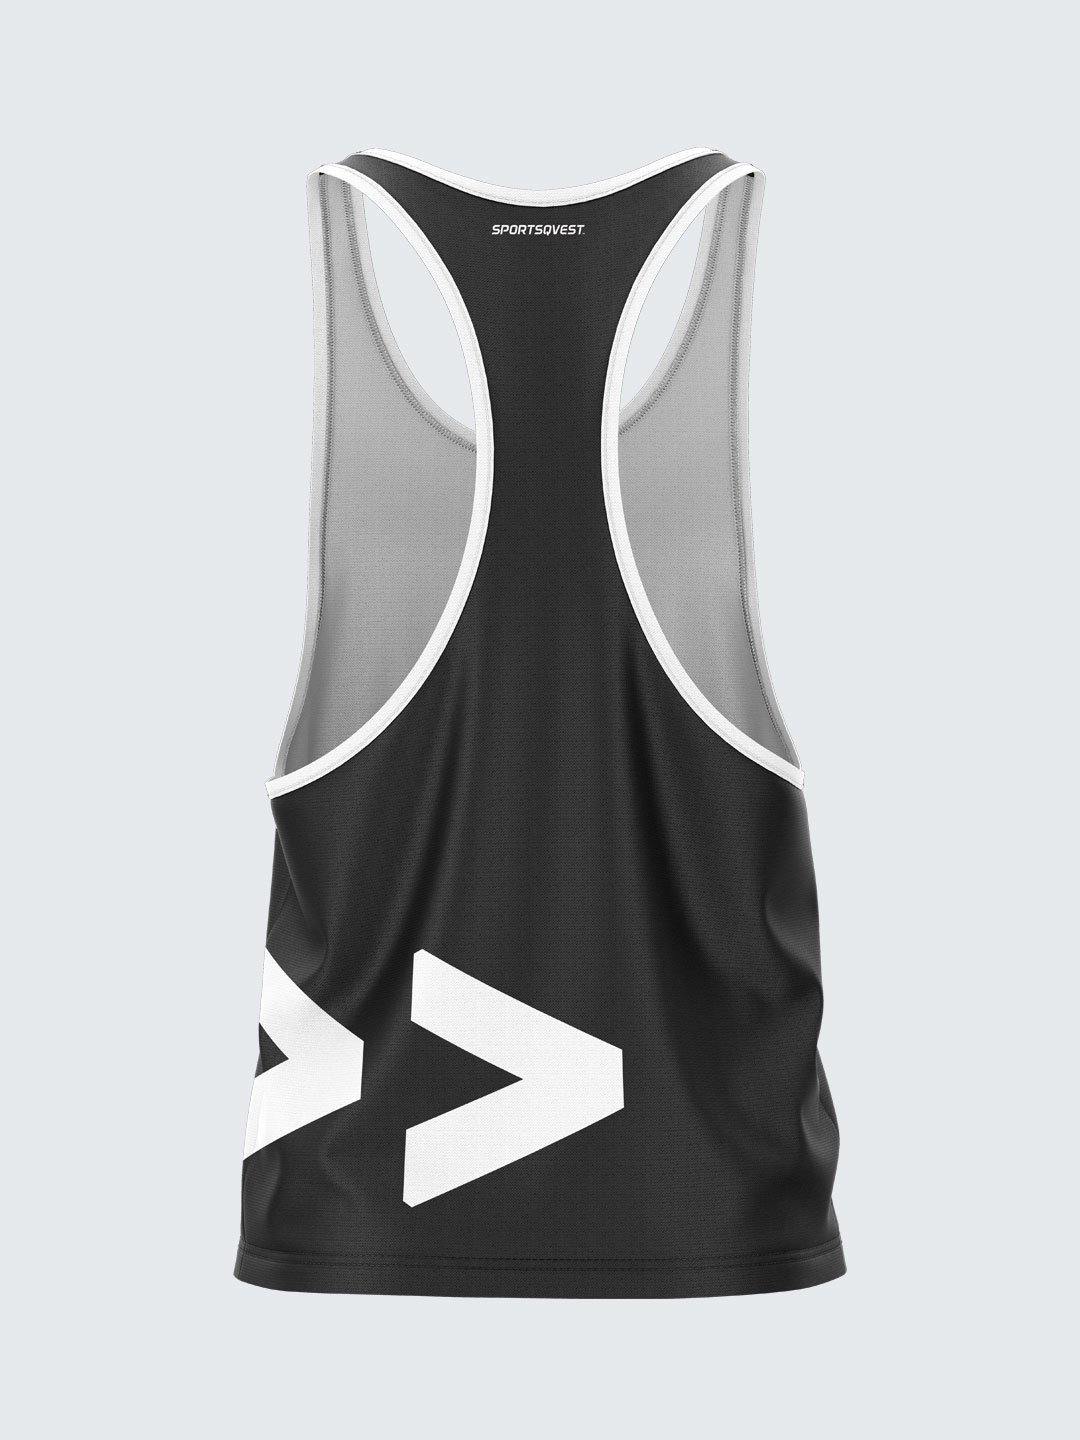 Men Racerback Black Printed Vest-1662BK - Sportsqvest